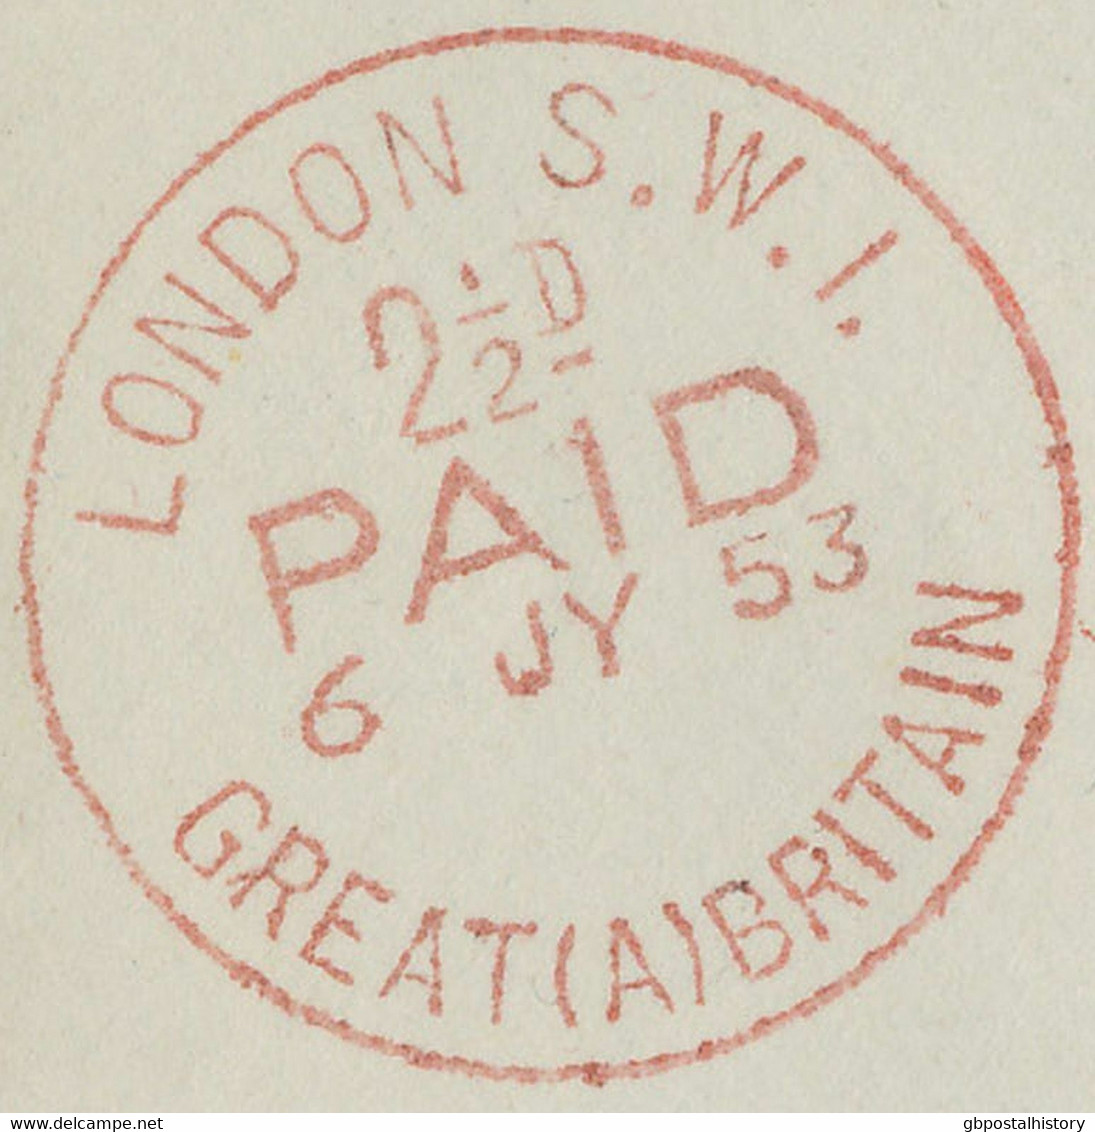 GB "LONDON S.W.I. / 2 1/2 D. / PAID / 6 JY 53 / GREAT (A) BRITAIN" Roter CDS Cvr - Dienstmarken